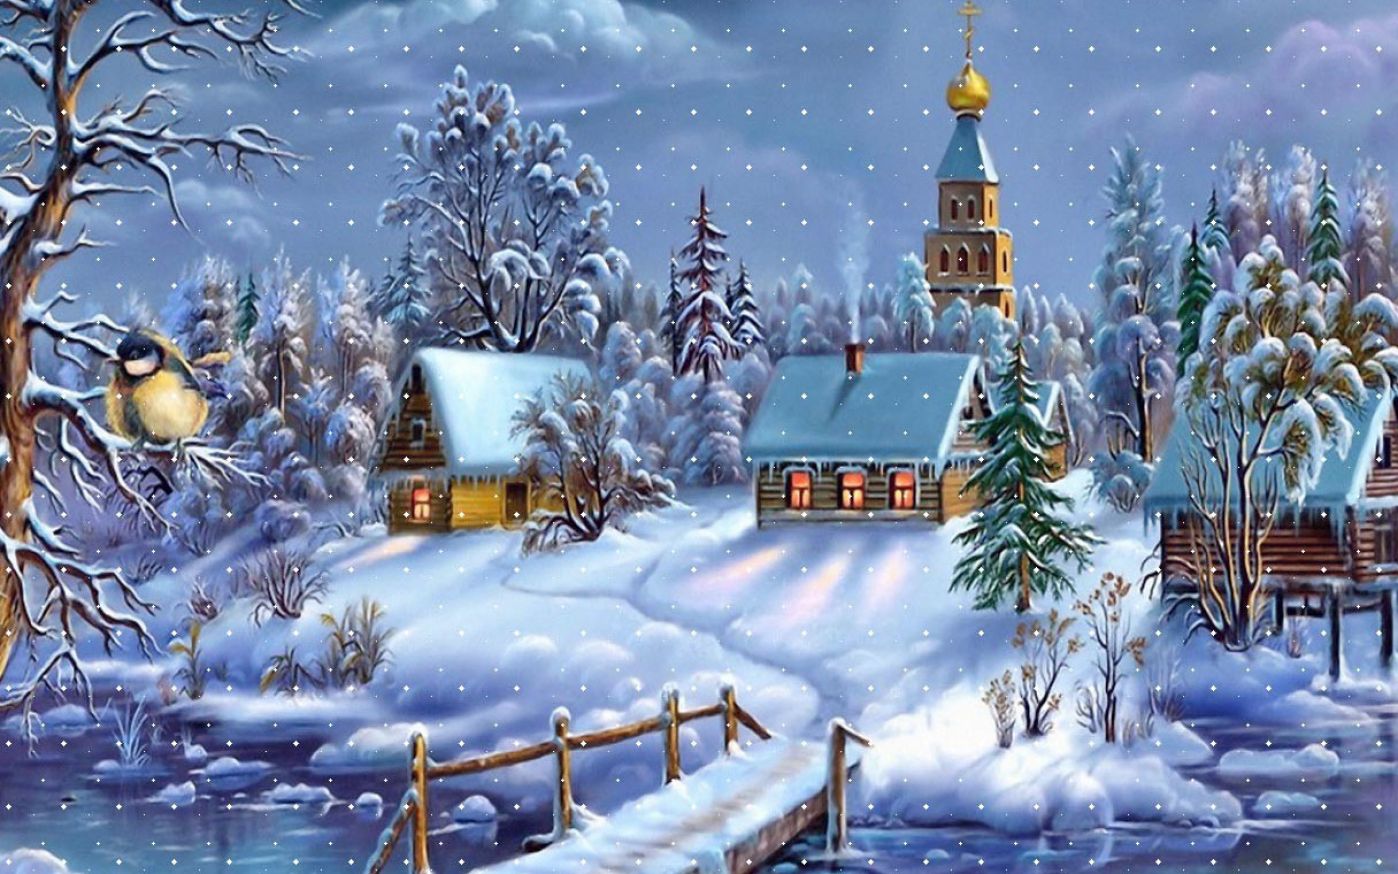 Free Animated Christmas Wallpaper Backgrounds - WallpaperSafari